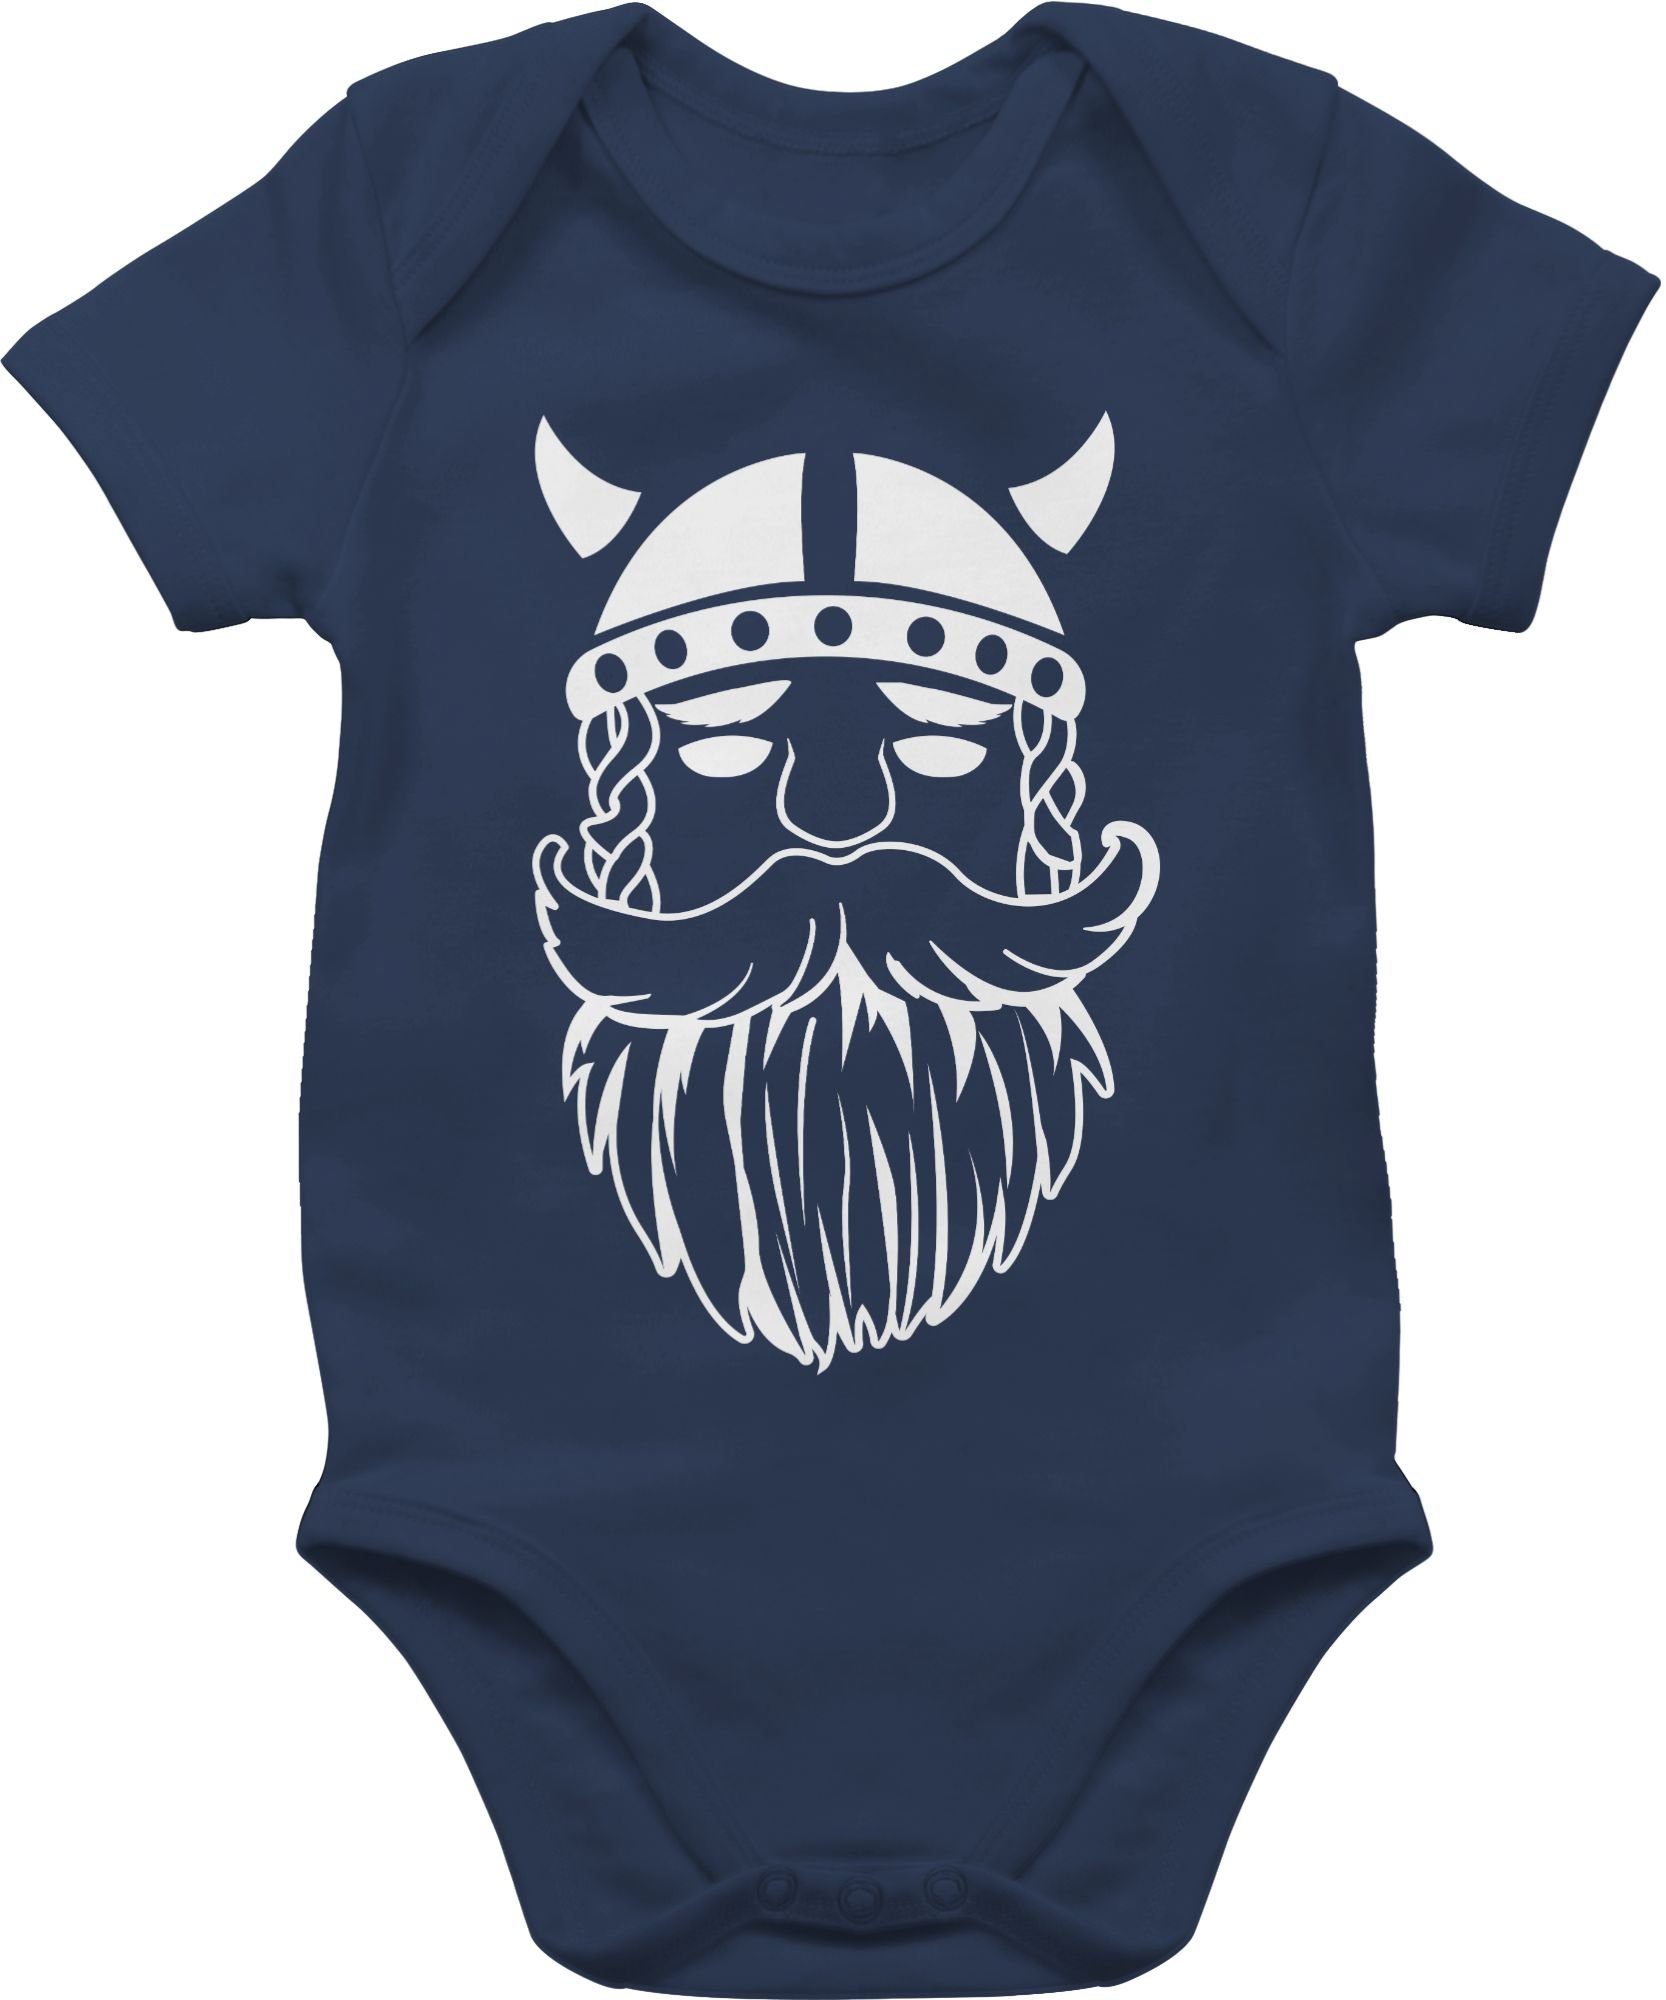 Shirtracer Shirtbody Wikinger Wikinger & Walhalla Baby 2 Navy Blau